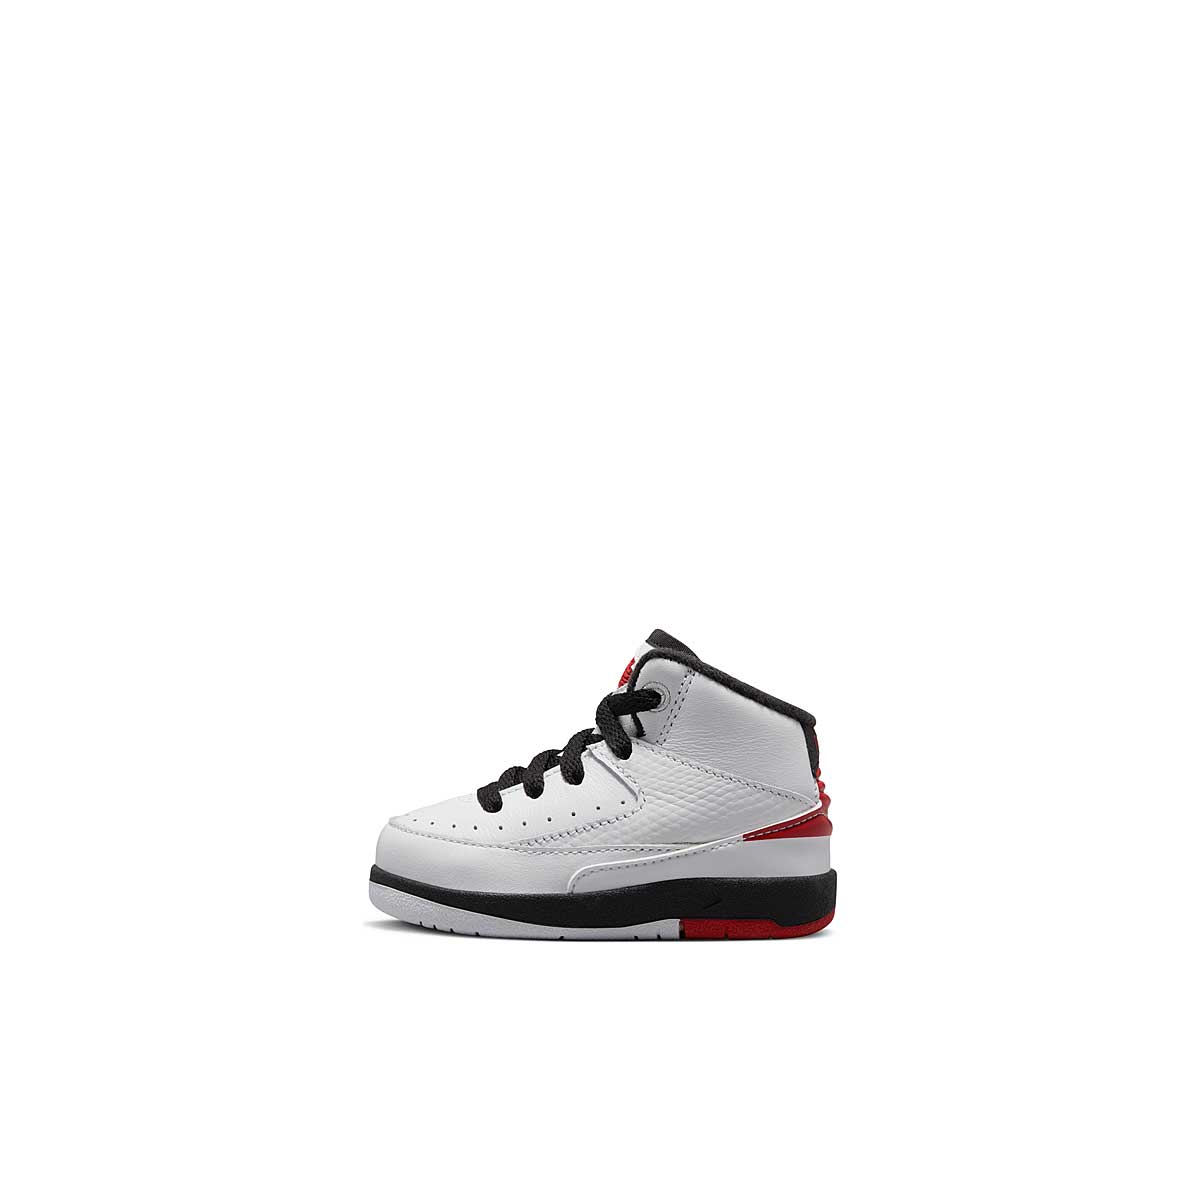 Jordan Jordan 2 Retro (Td), White/Varsity Red-Black